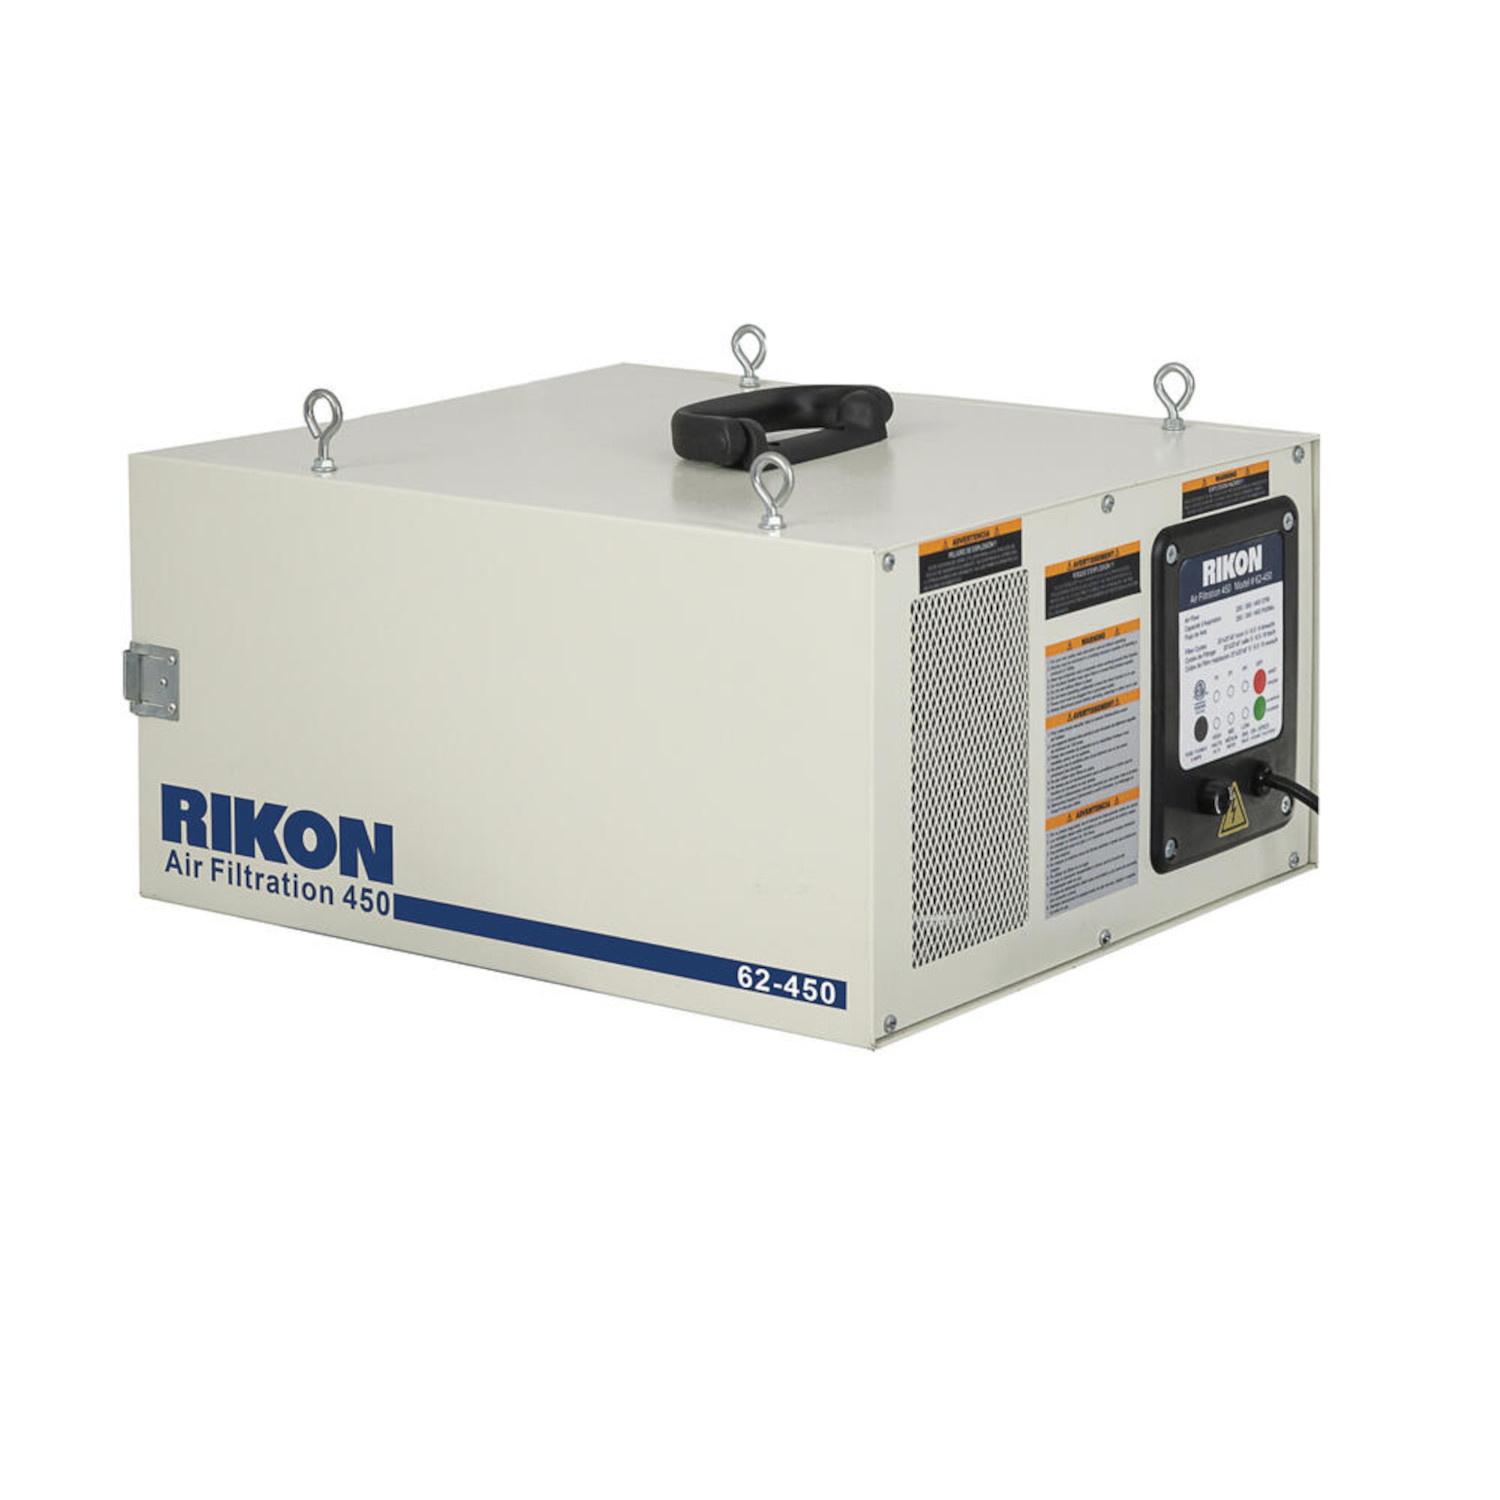 Rikon 62-450 Air Filtration System